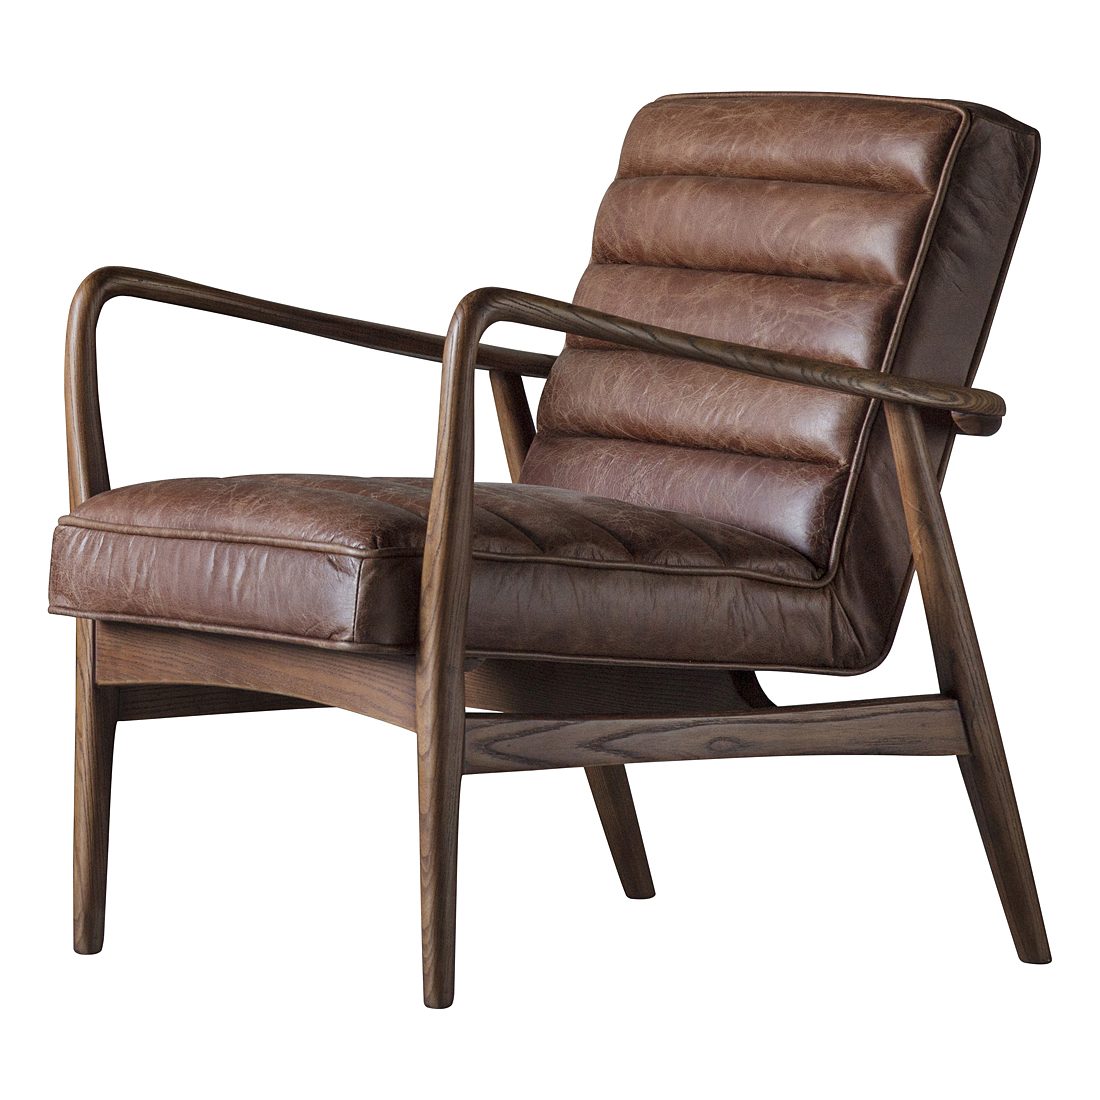 Retro Brown Leather Armchair Primrose, Leather Retro Chair